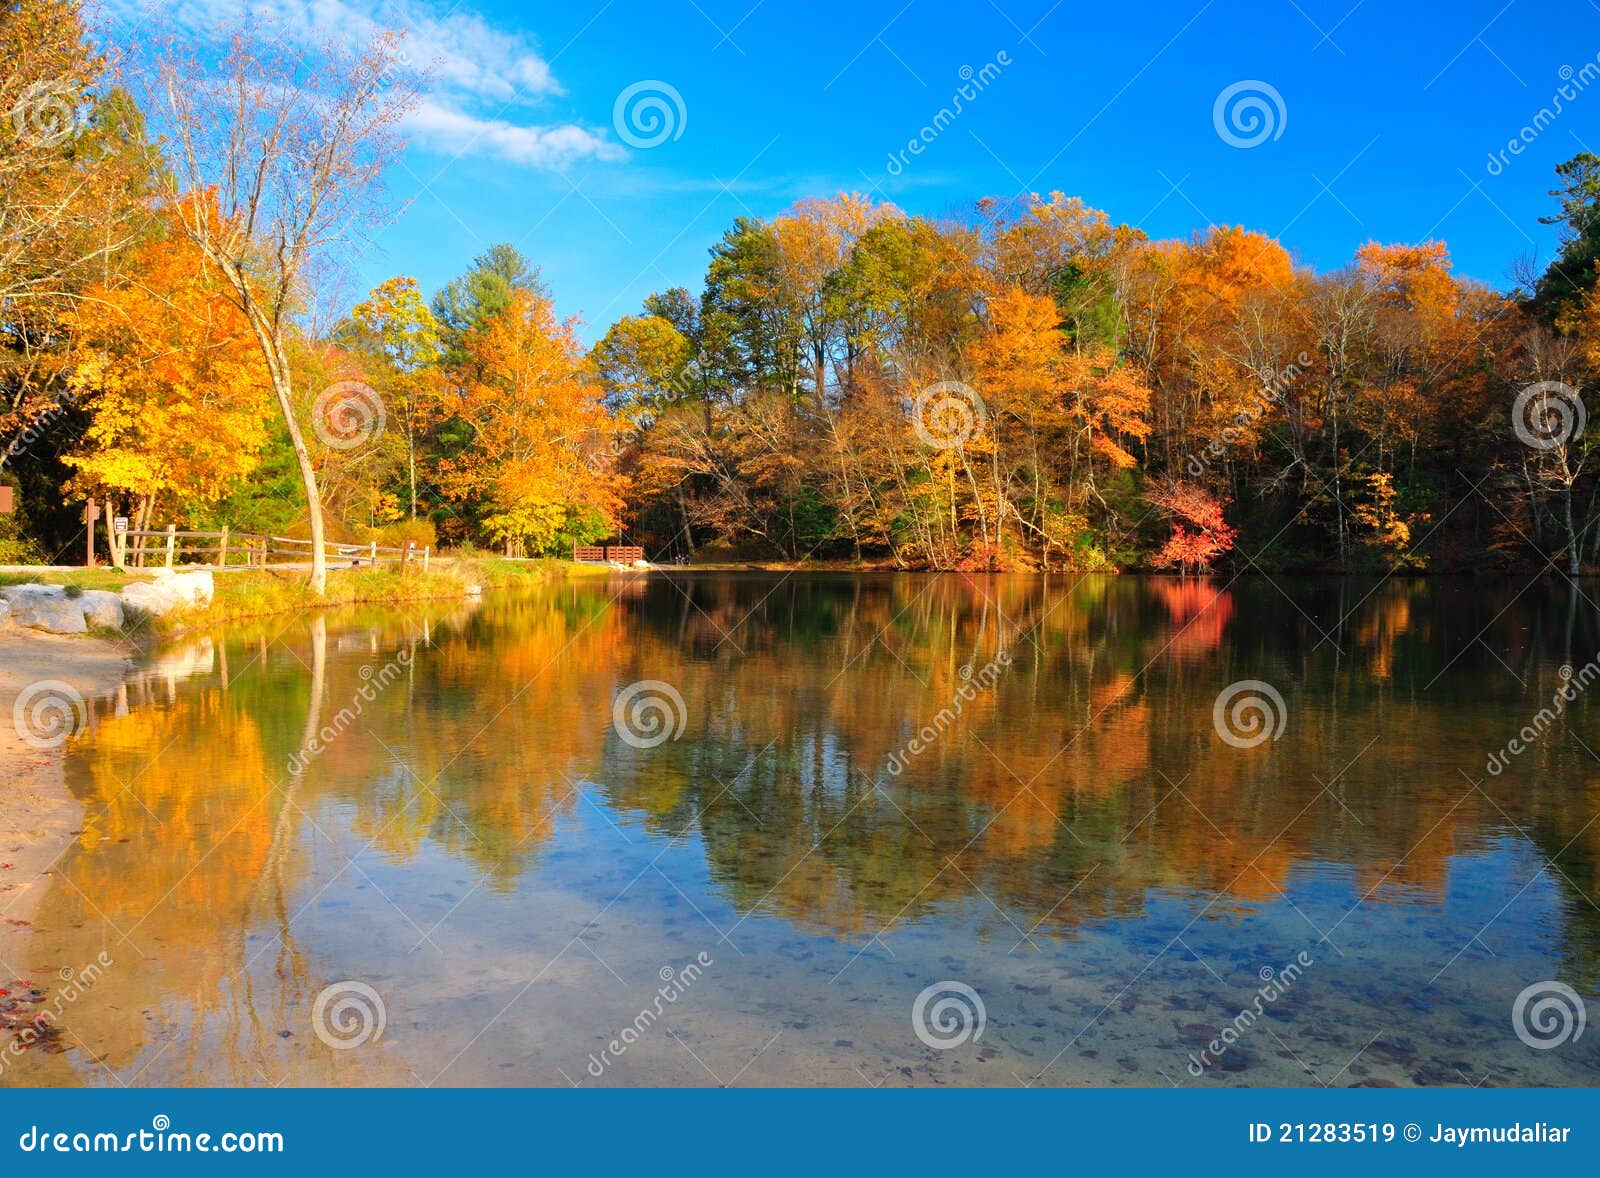 peak fall foliage at a lake